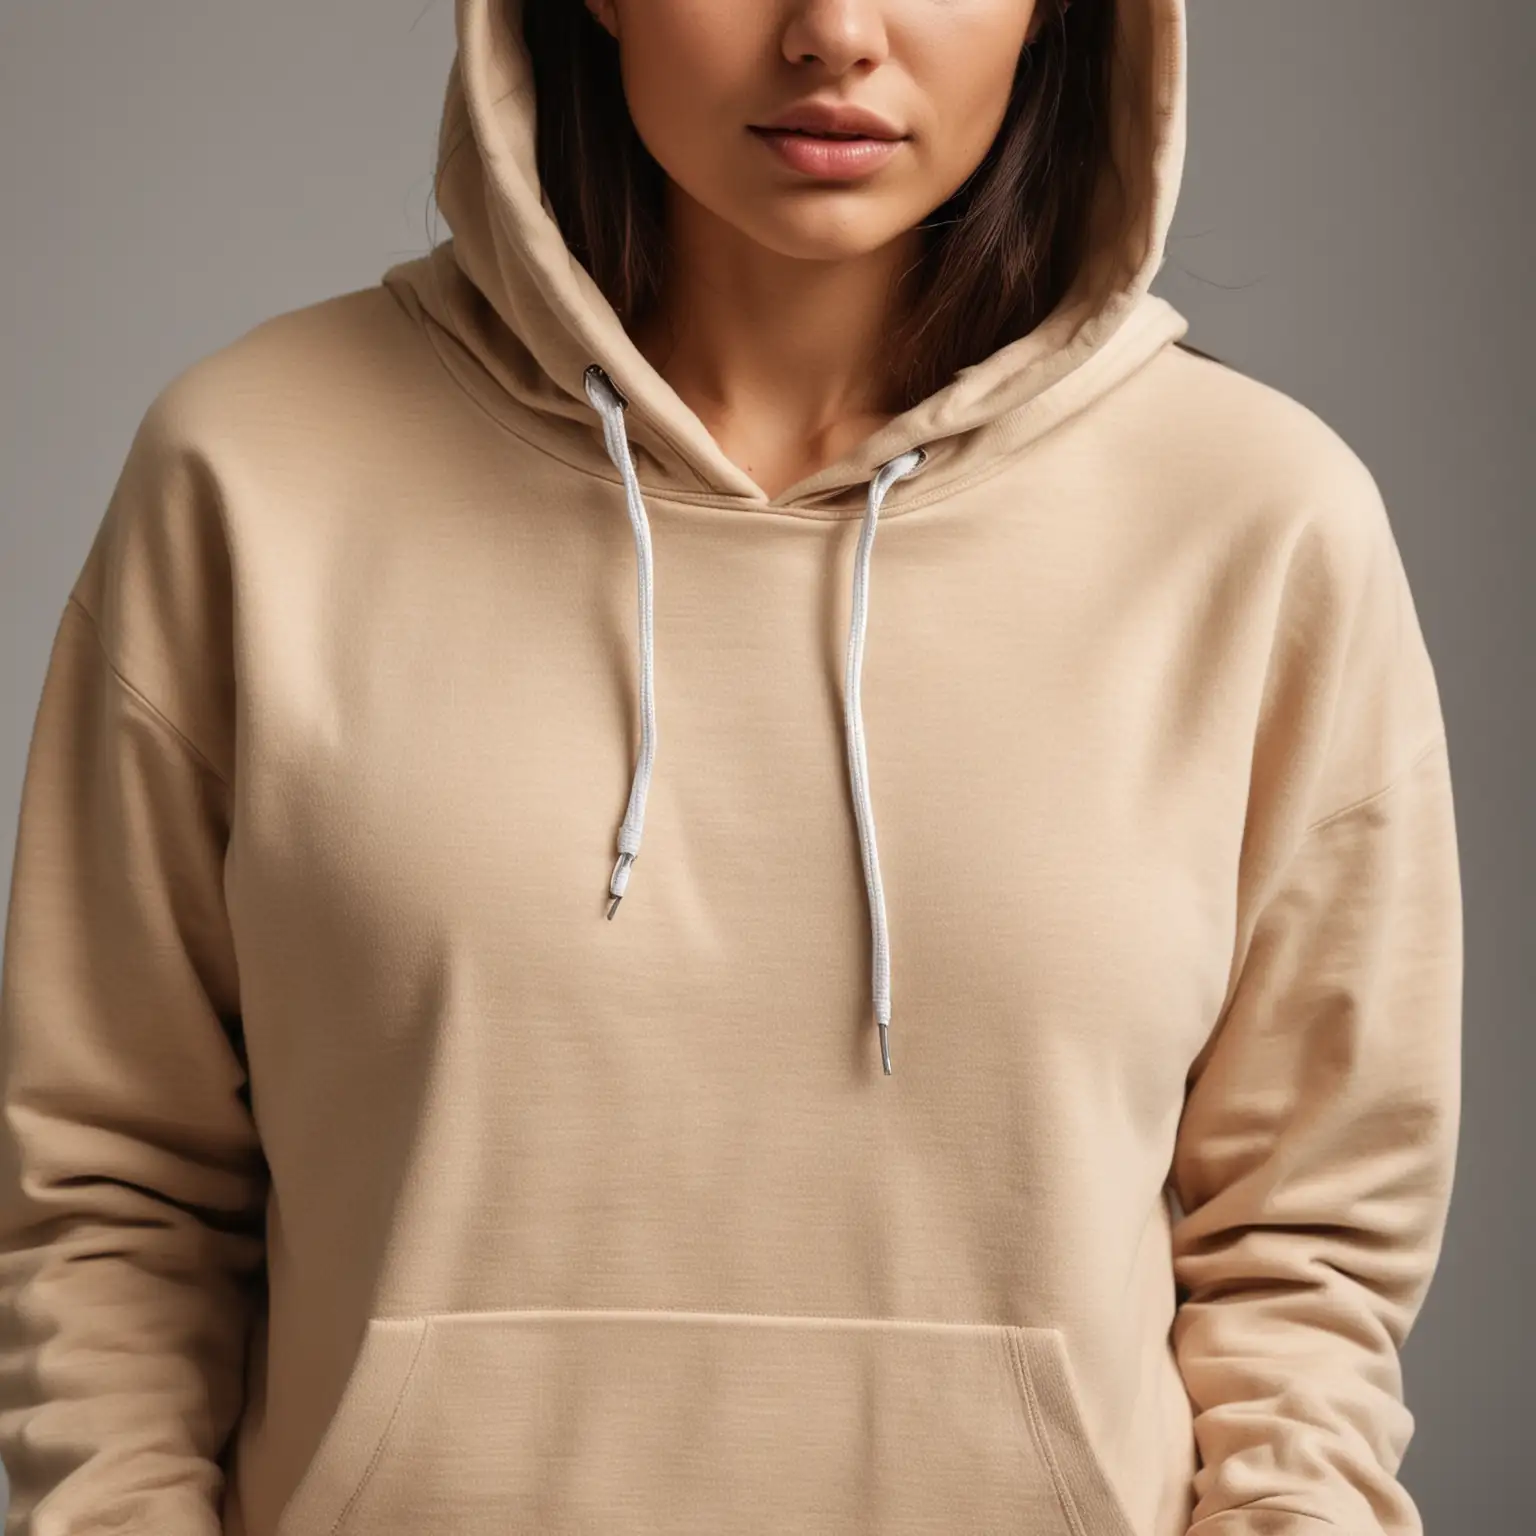 Woman in a beige hoodie, close up of torso